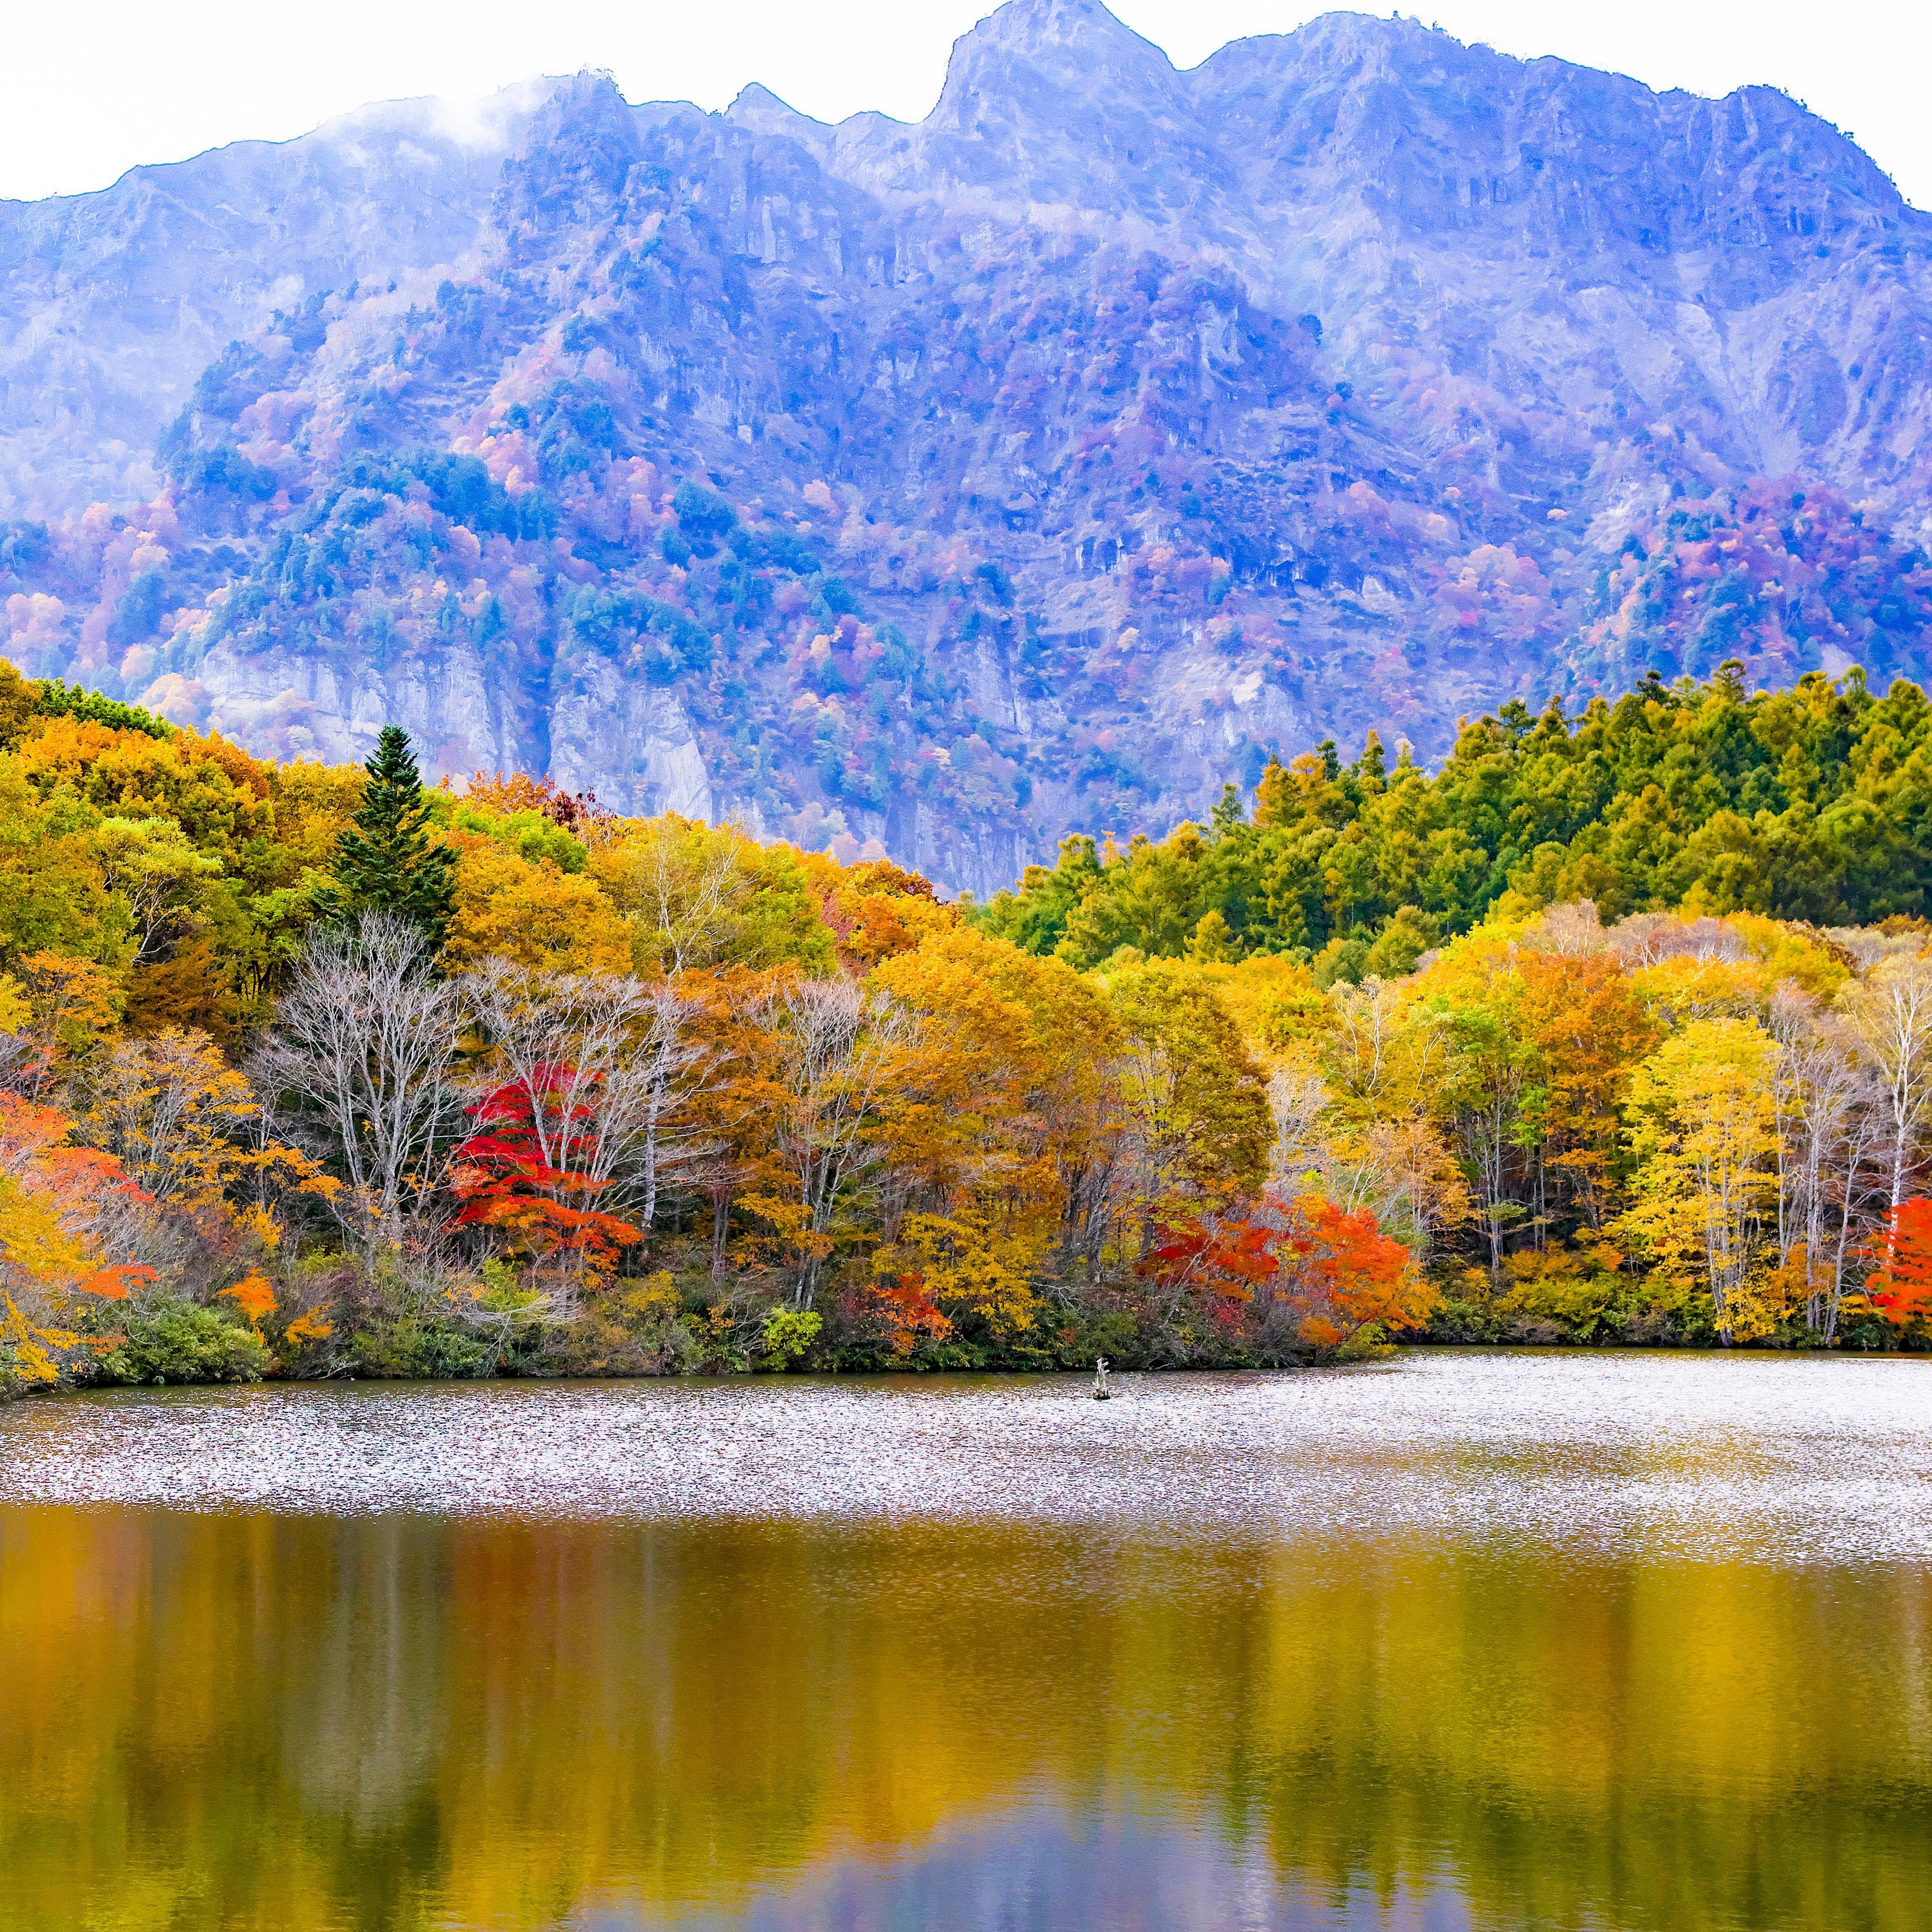 Download wallpaper 3415x3415 japan, togakushi, lake, mountains, trees, autumn ipad pro 12.9 retina for parallax HD background